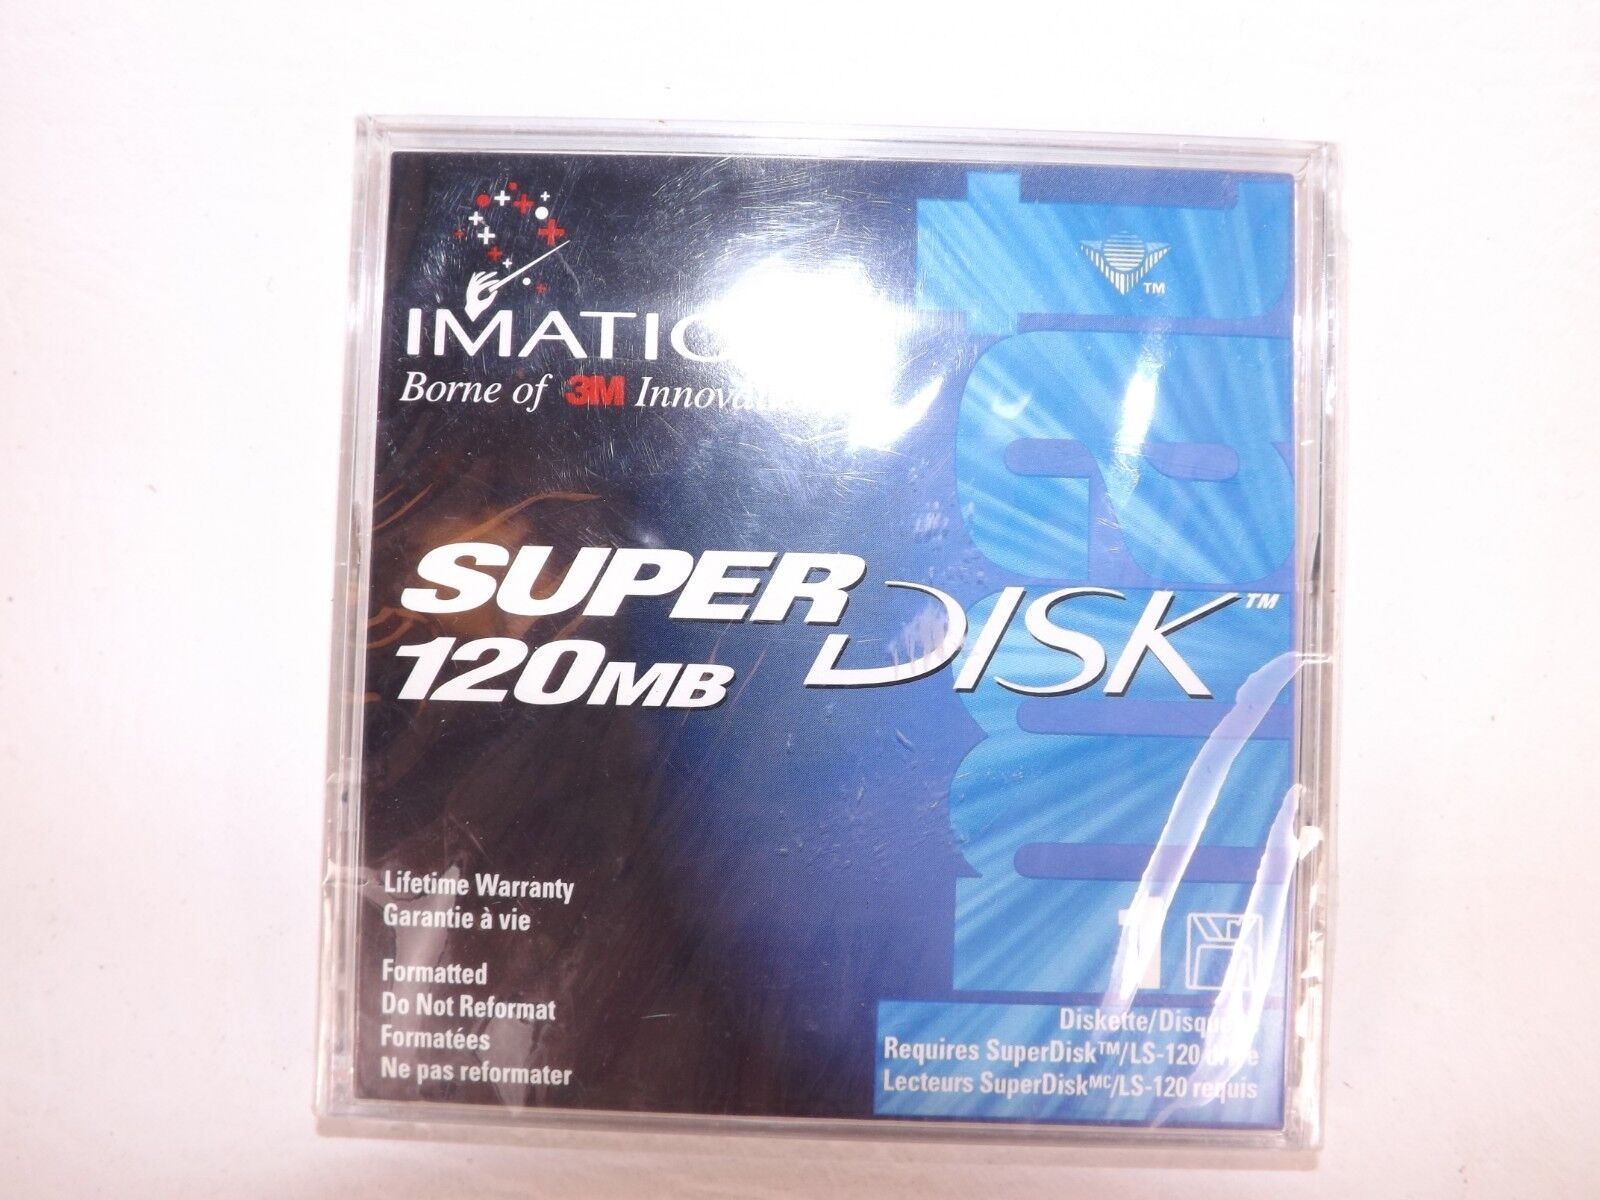 3M Innovation Imation LS-120 SuperDisk 120MB NEW SEALED